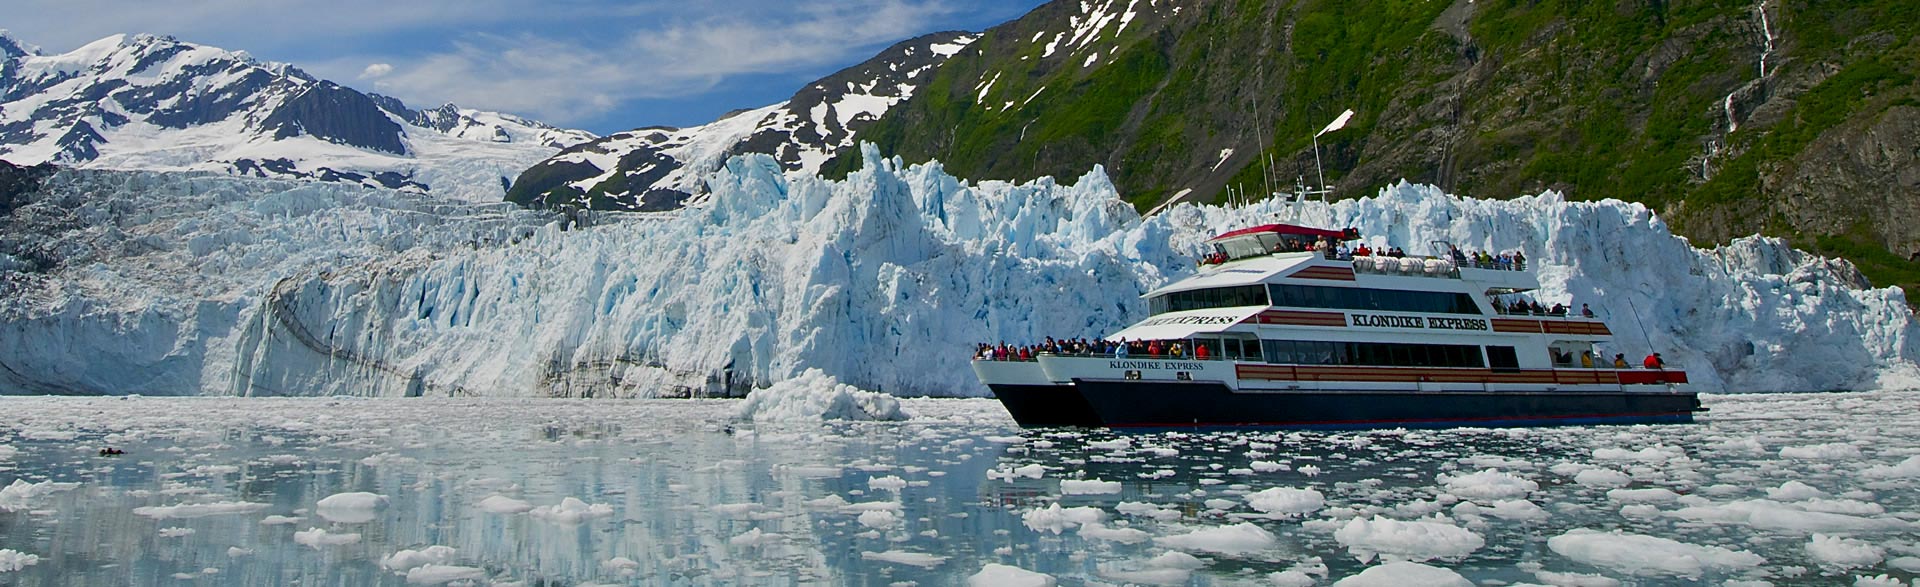 alaska cruise glacier